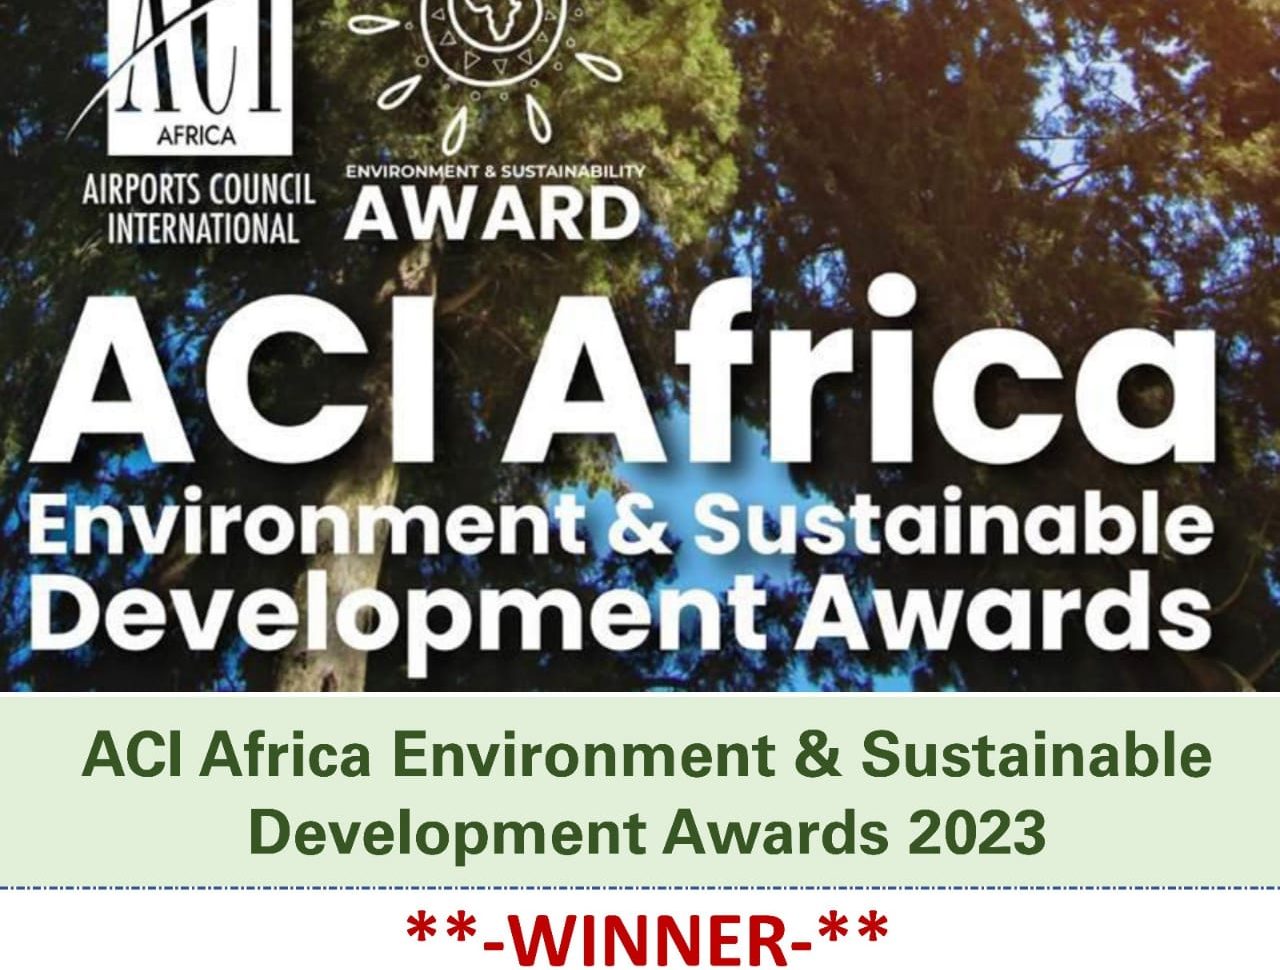 Cairo International Airport wins ACI Africa Environment, Sustainable Development Award 2023